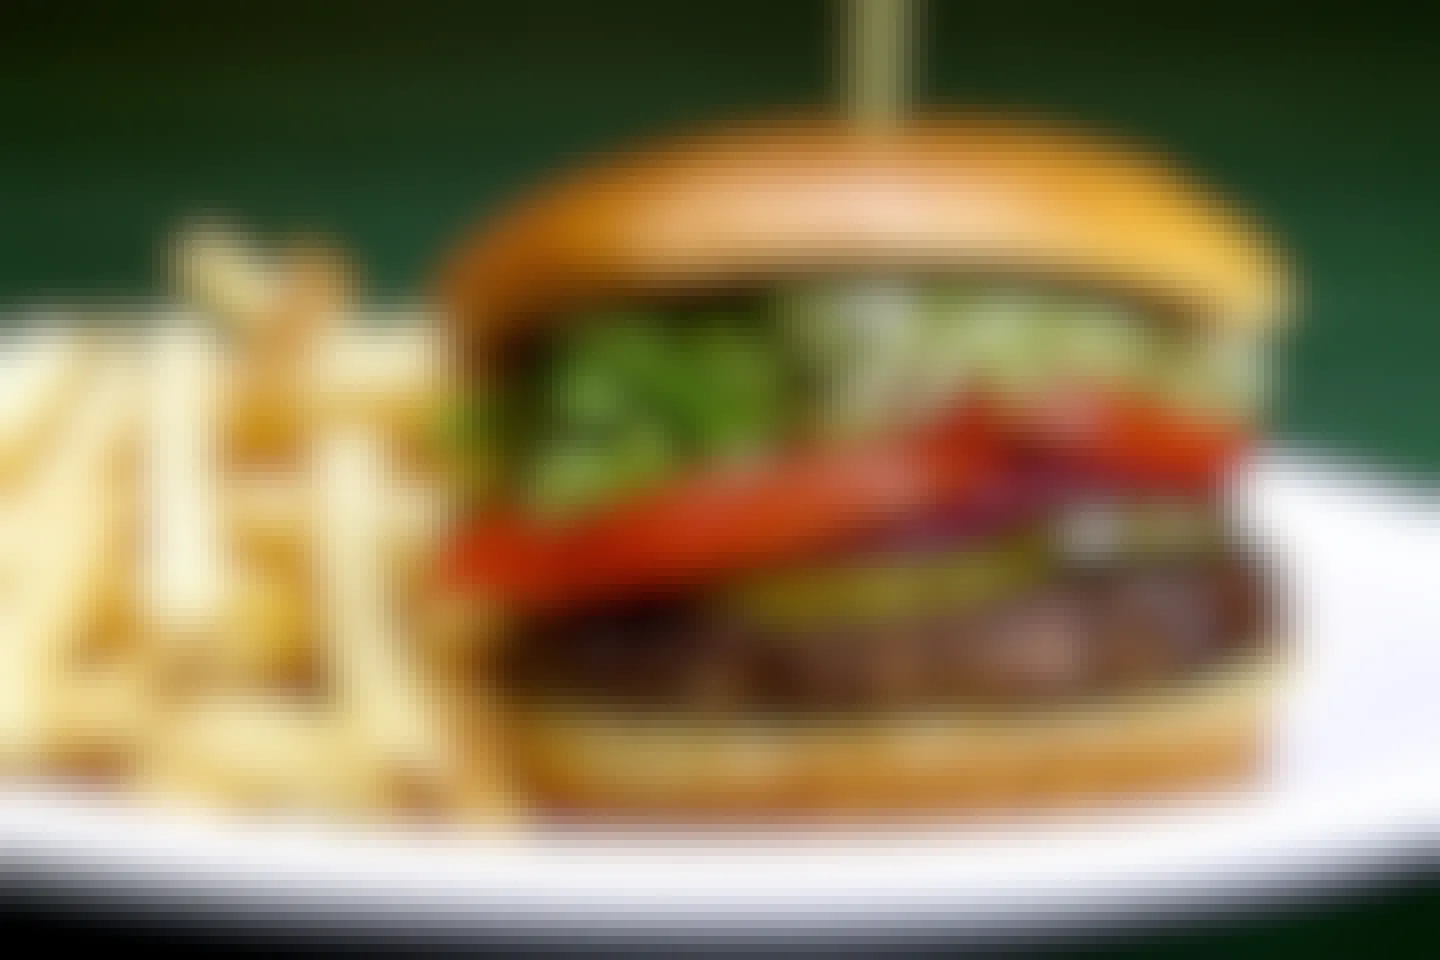 A close up on a Beef 'O' Brady's hamburger and fries